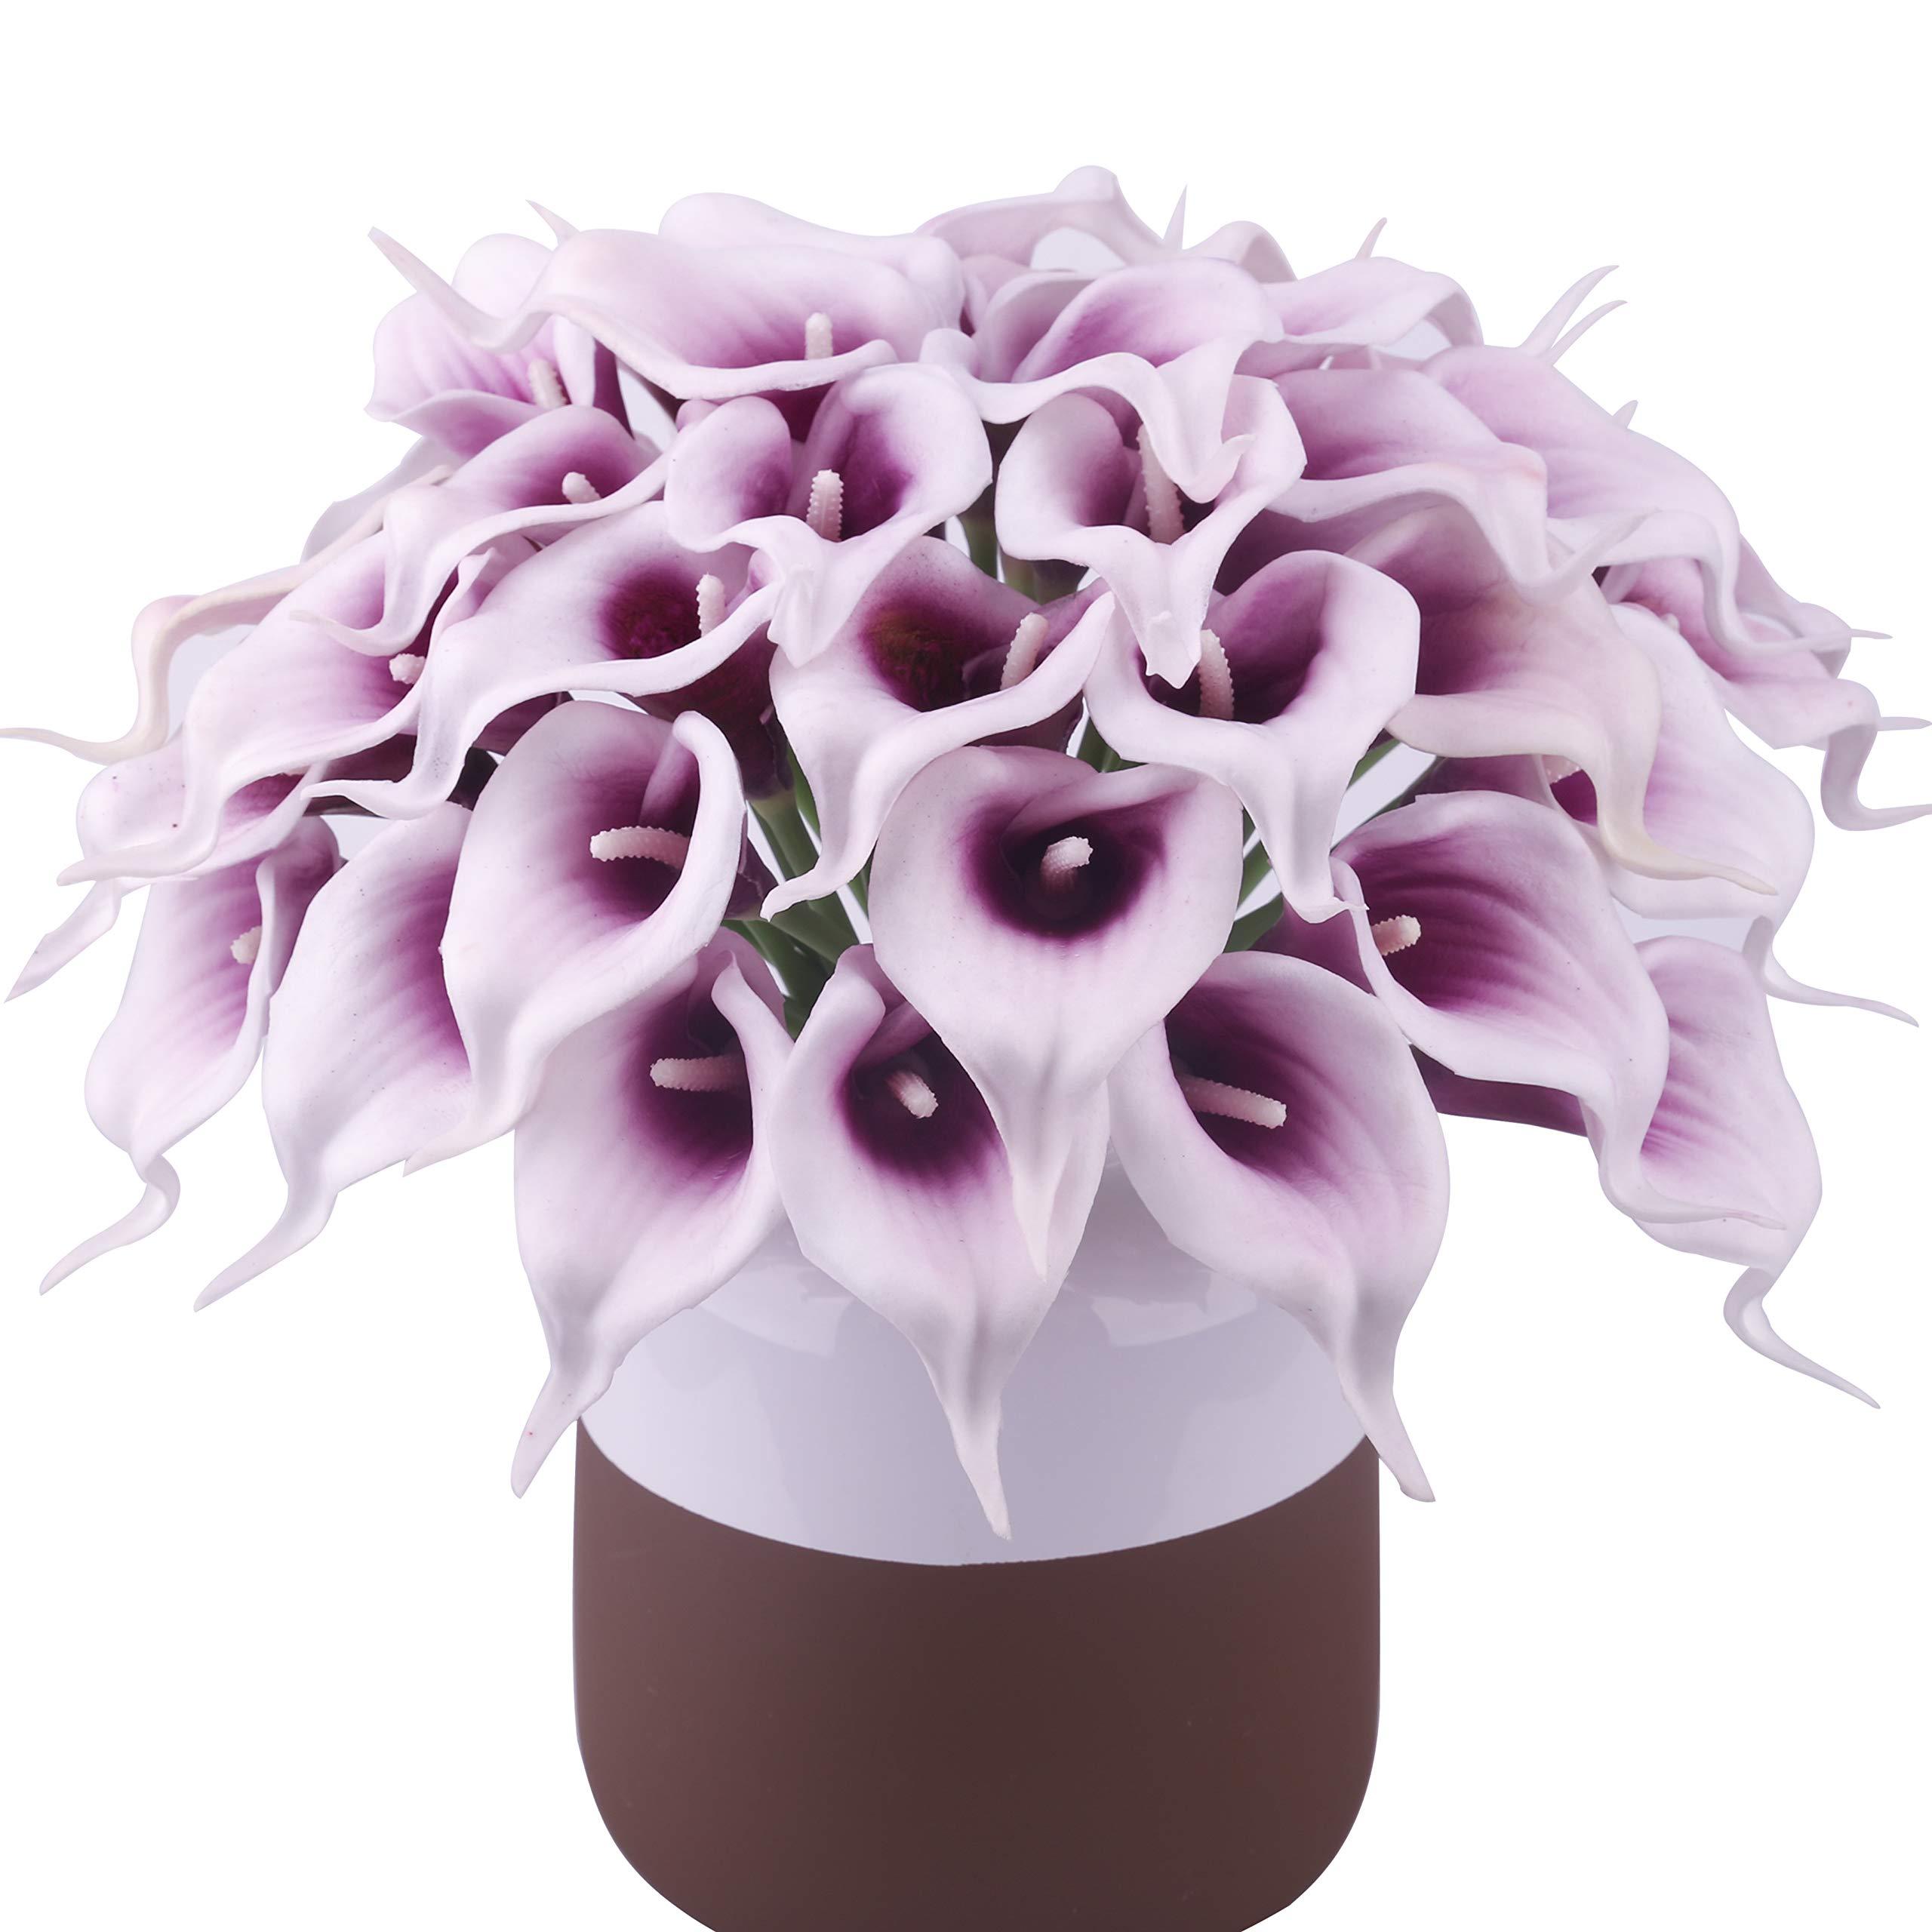 

16pcs Artificial Calla Lily Flowers, 13.5" Fake Flower For Diy Bridal Wedding Bouquet Centerpieces Home Decor, Home Kitchen & Wedding Decor